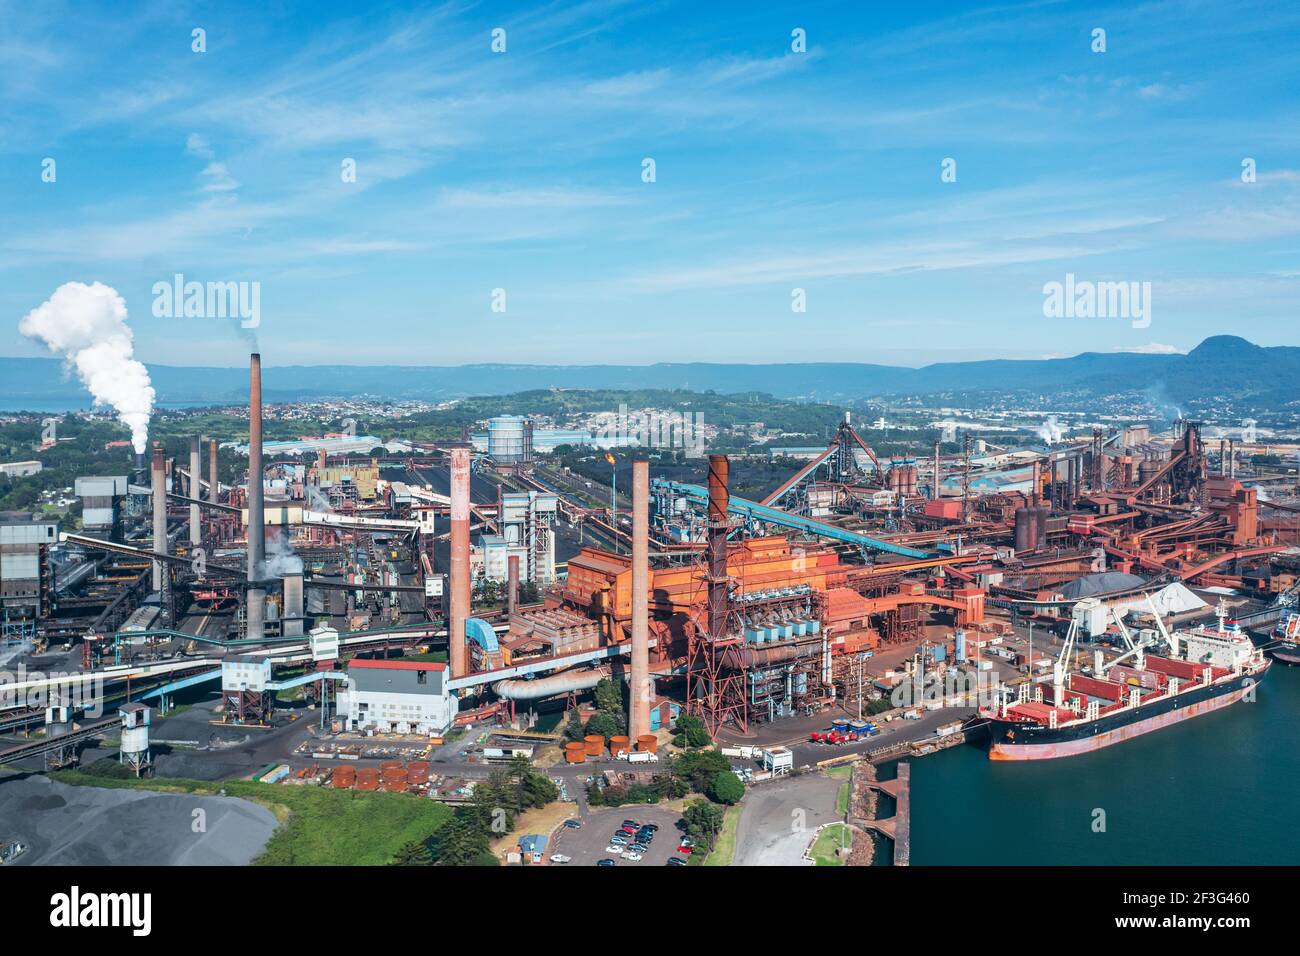 Aerial view of Port Kembla steelworks, Australia Stock Photo